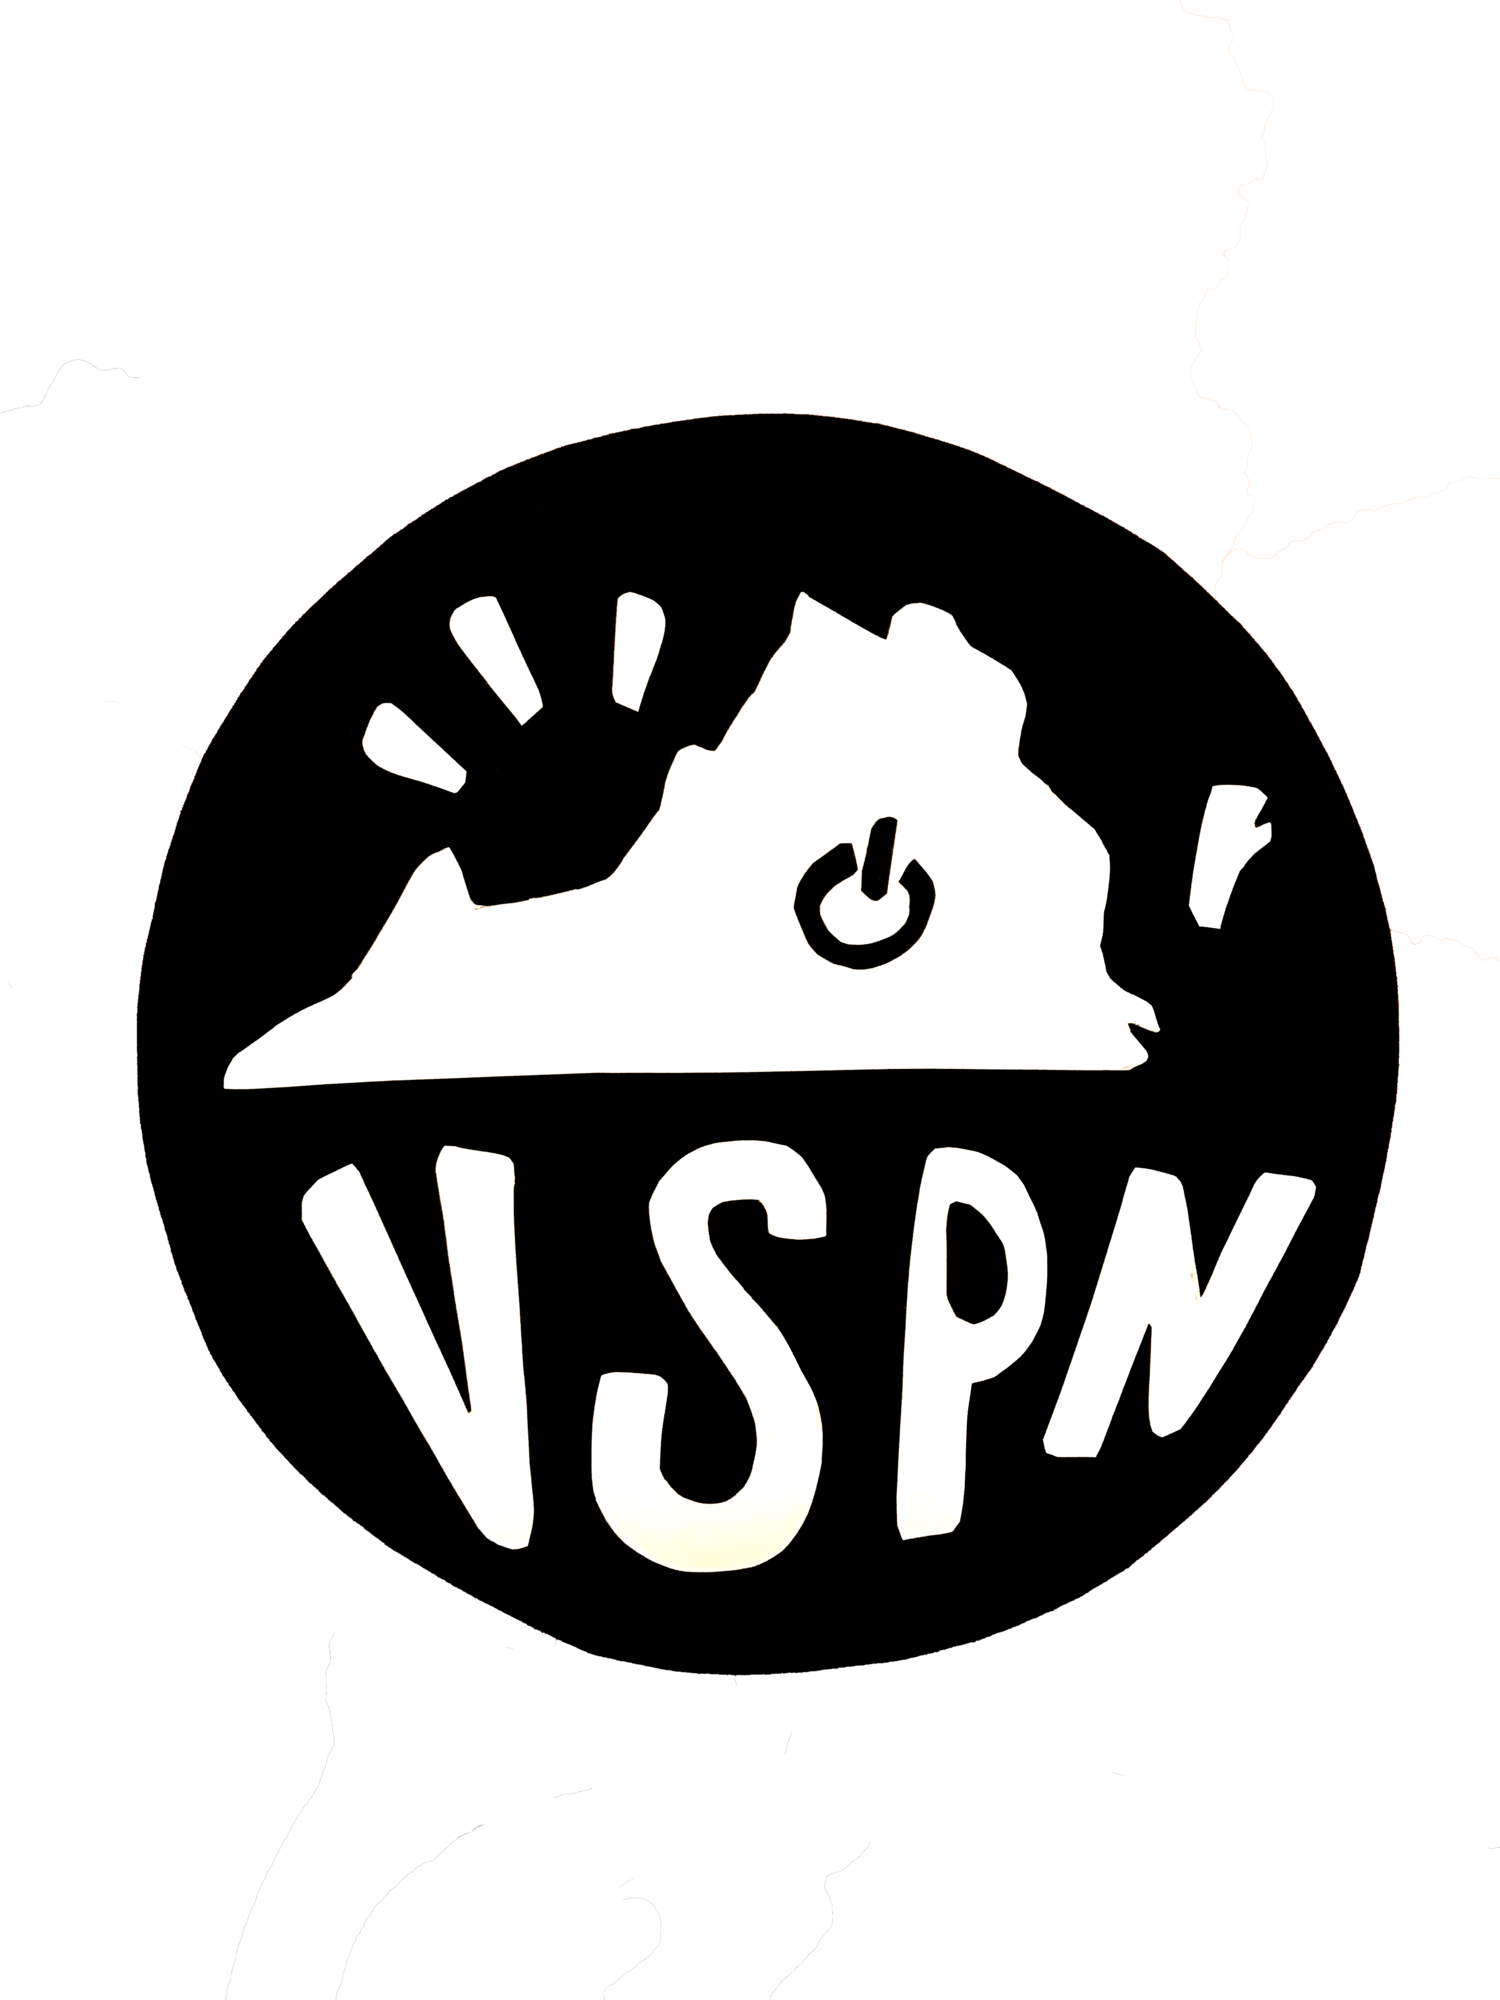 Virginia Student Power Network